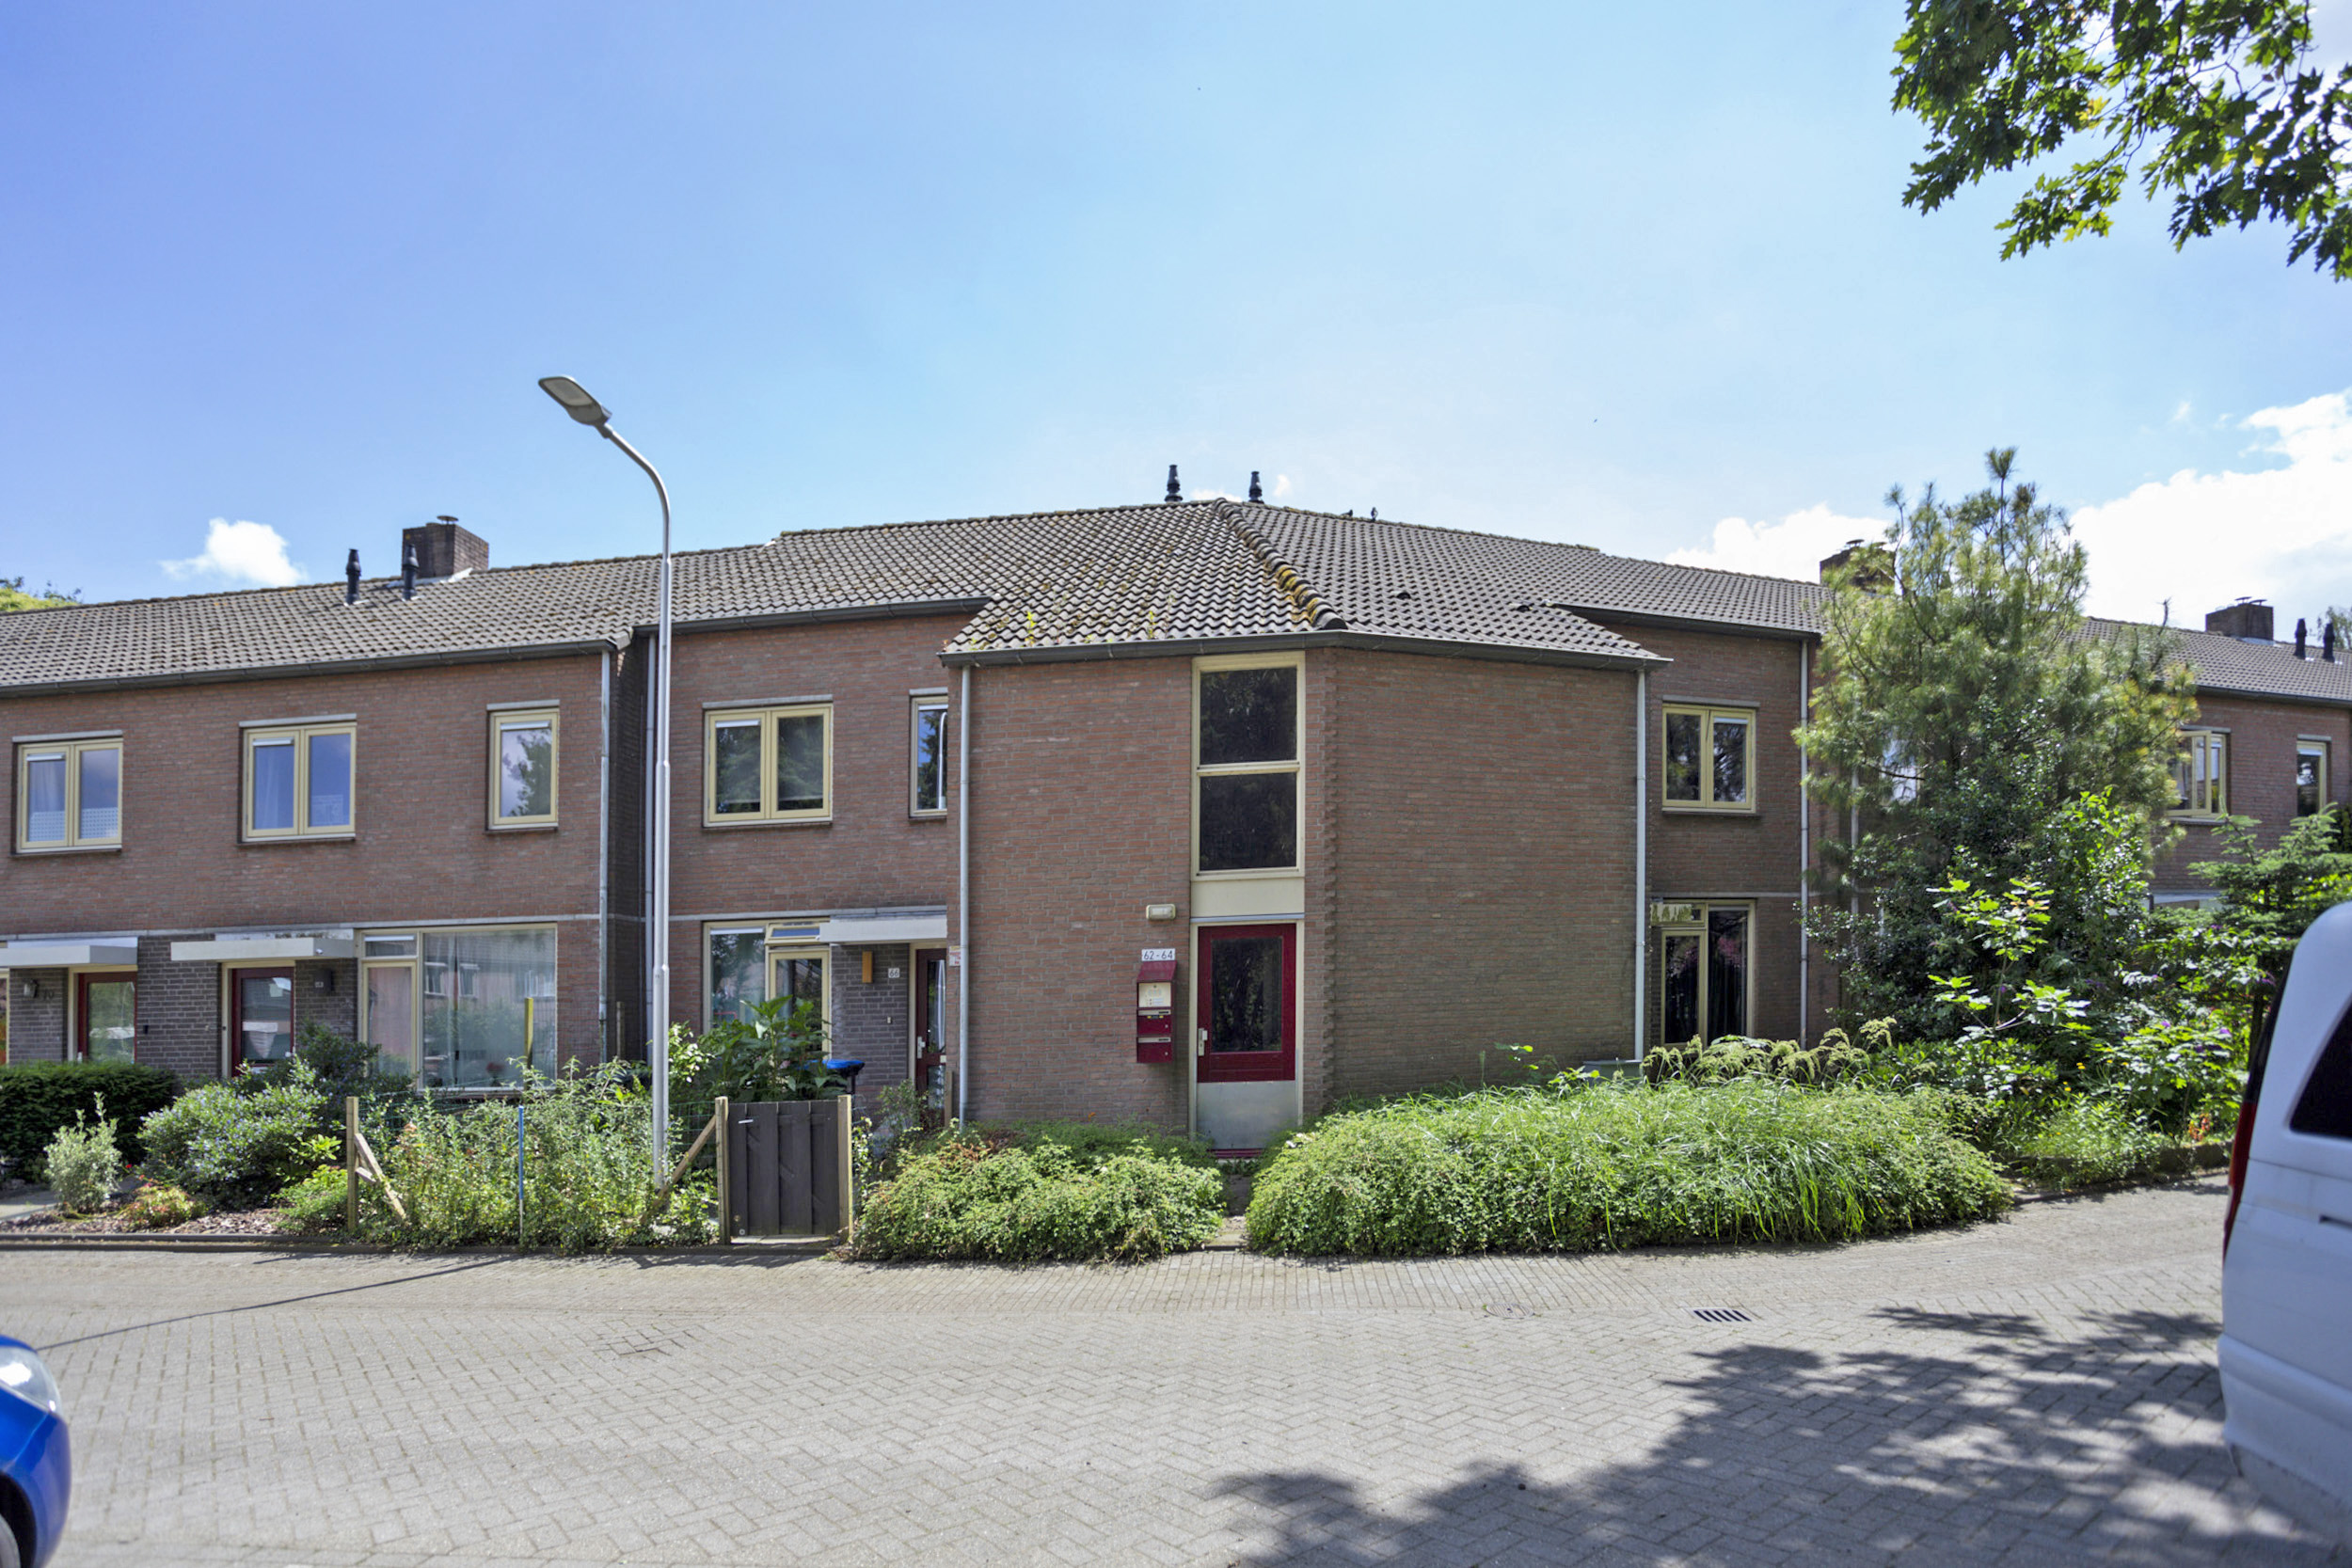 Lavendelring 64, 4881 GW Zundert, Nederland